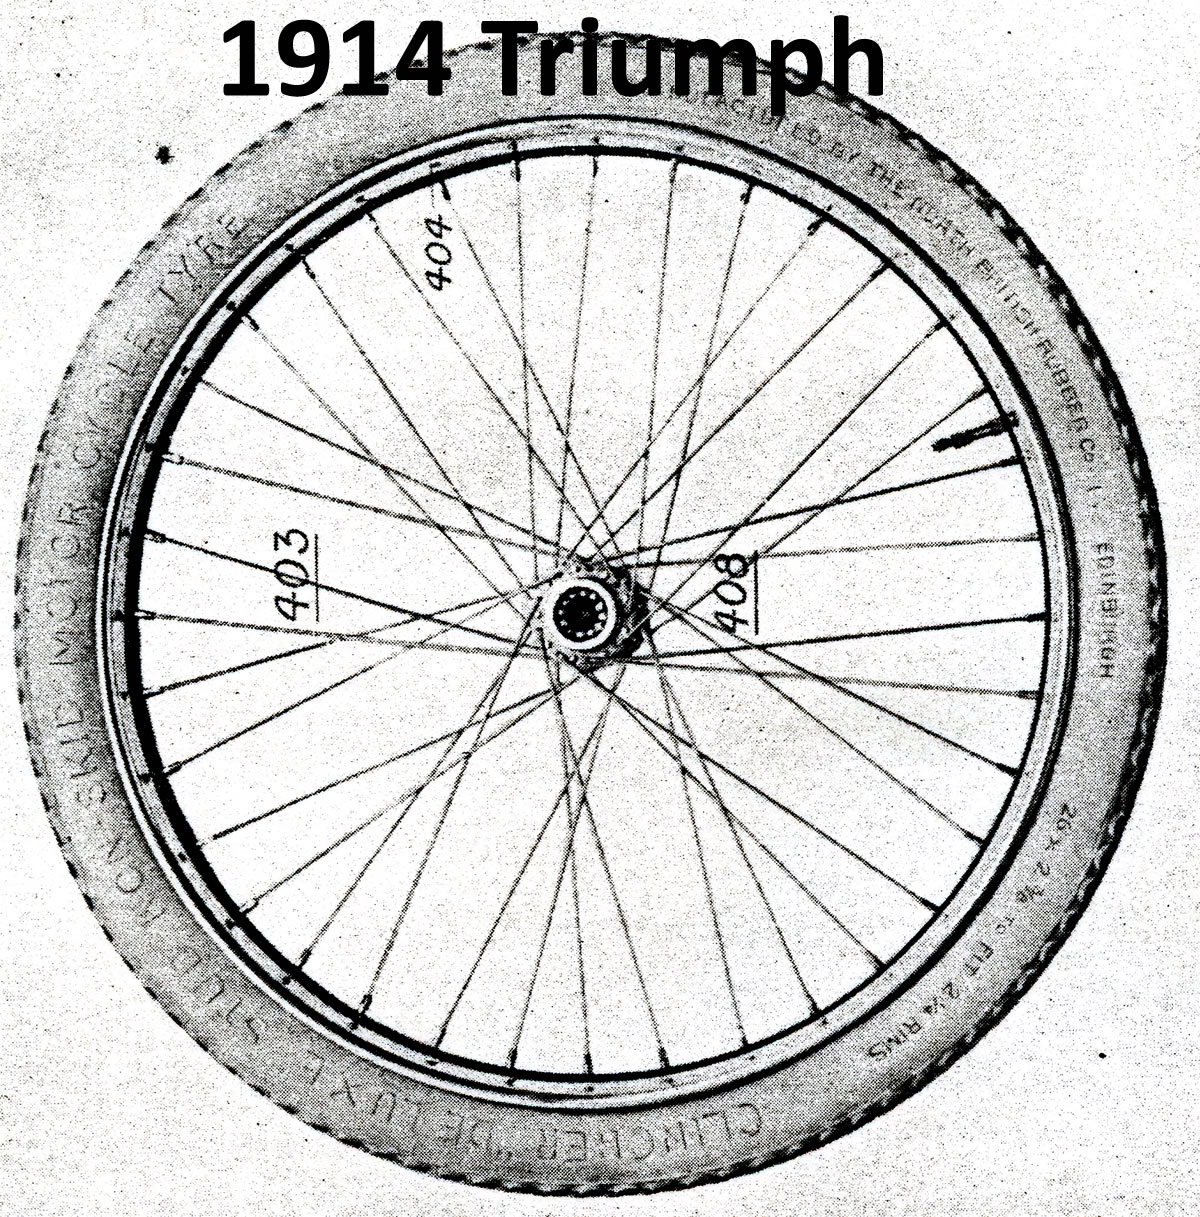 1914 Triumph wheel